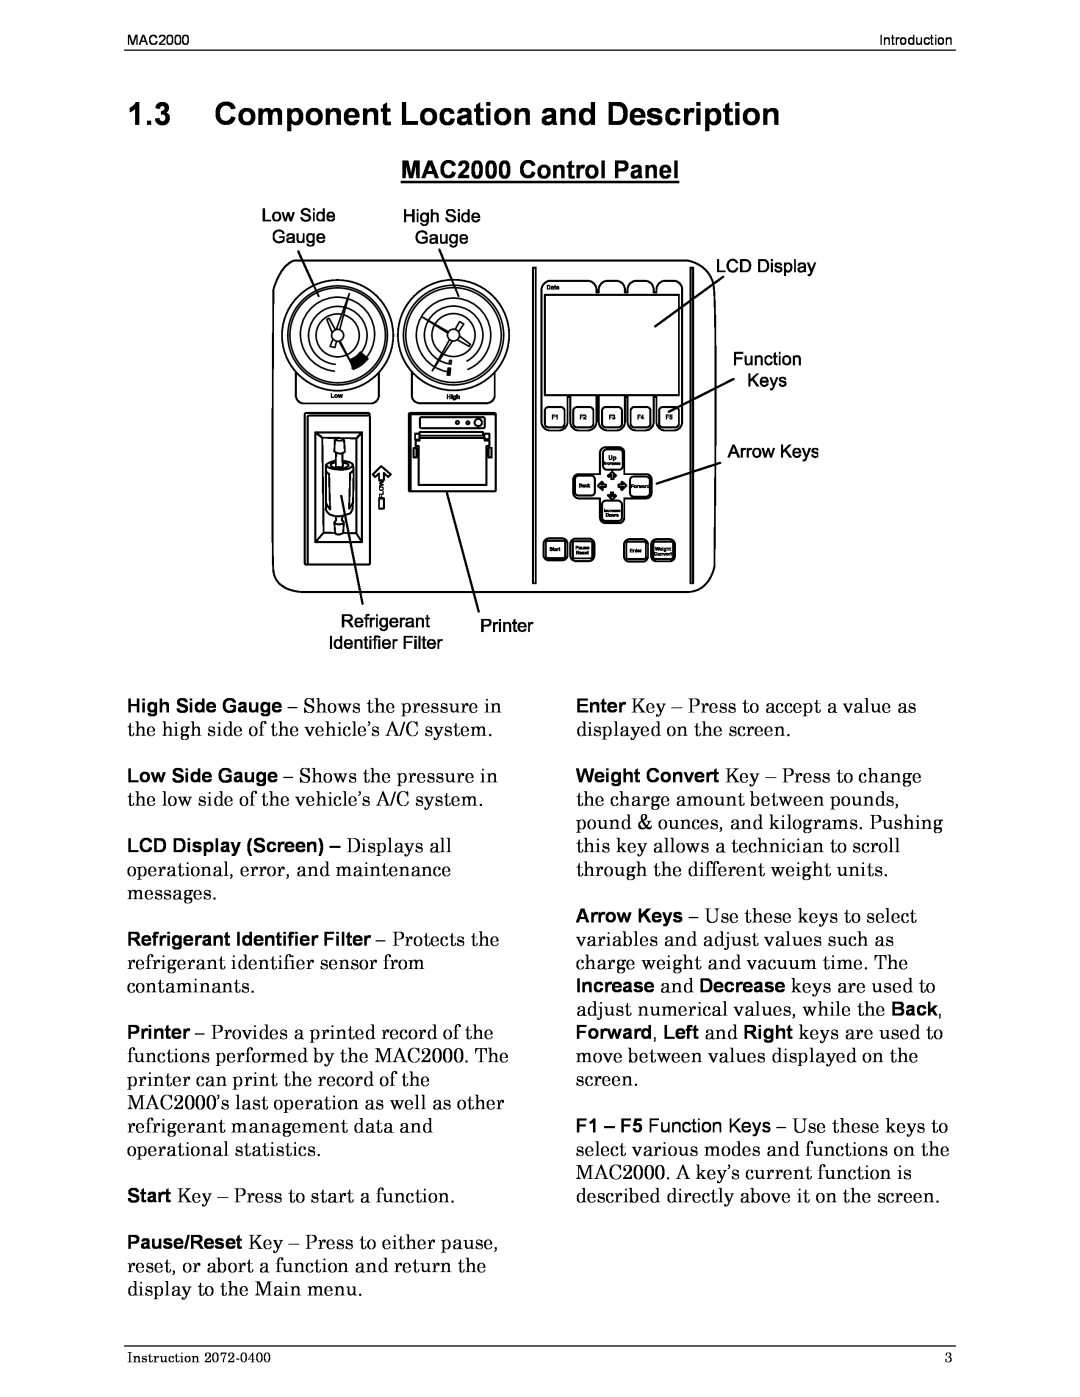 Bacharach 2072-0400 manual 1.3Component Location and Description, MAC2000 Control Panel 